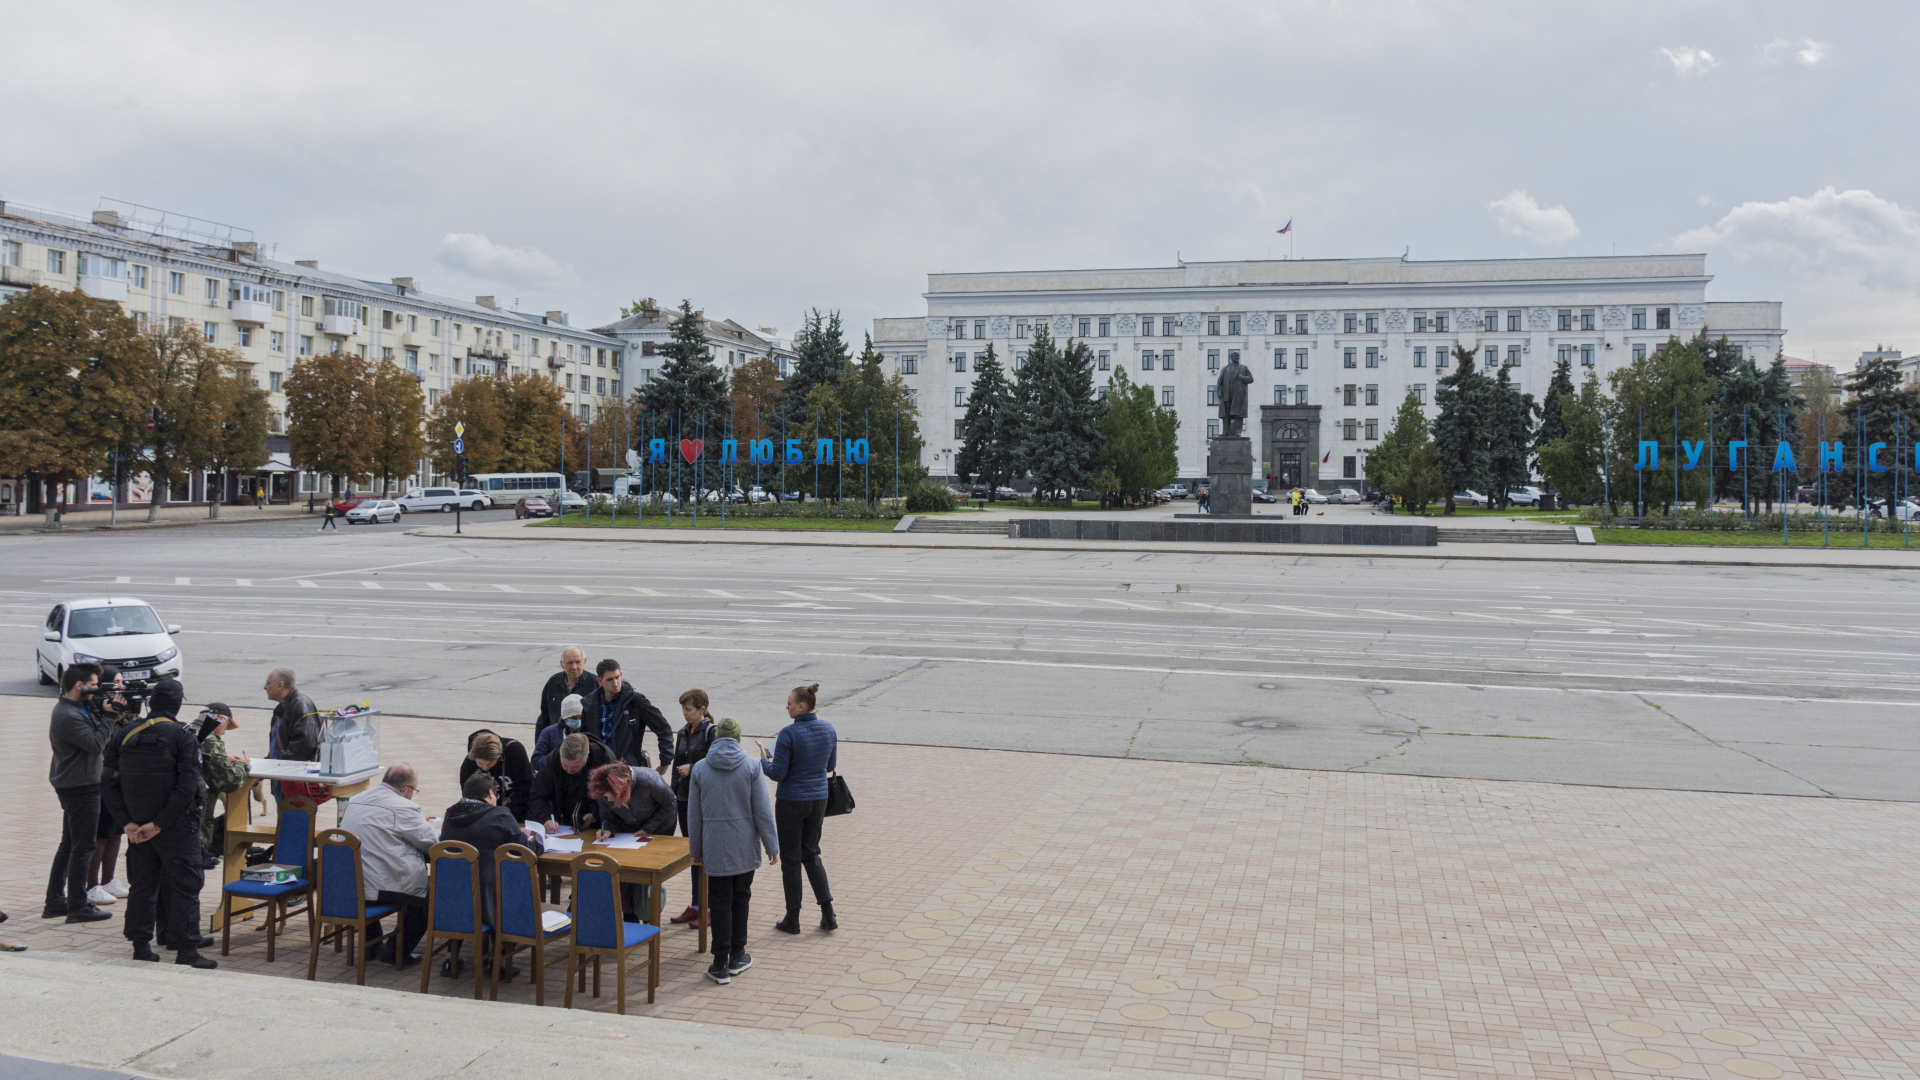 Wahllokal zum "Referendum" im Freien in Luhansk  | EPA